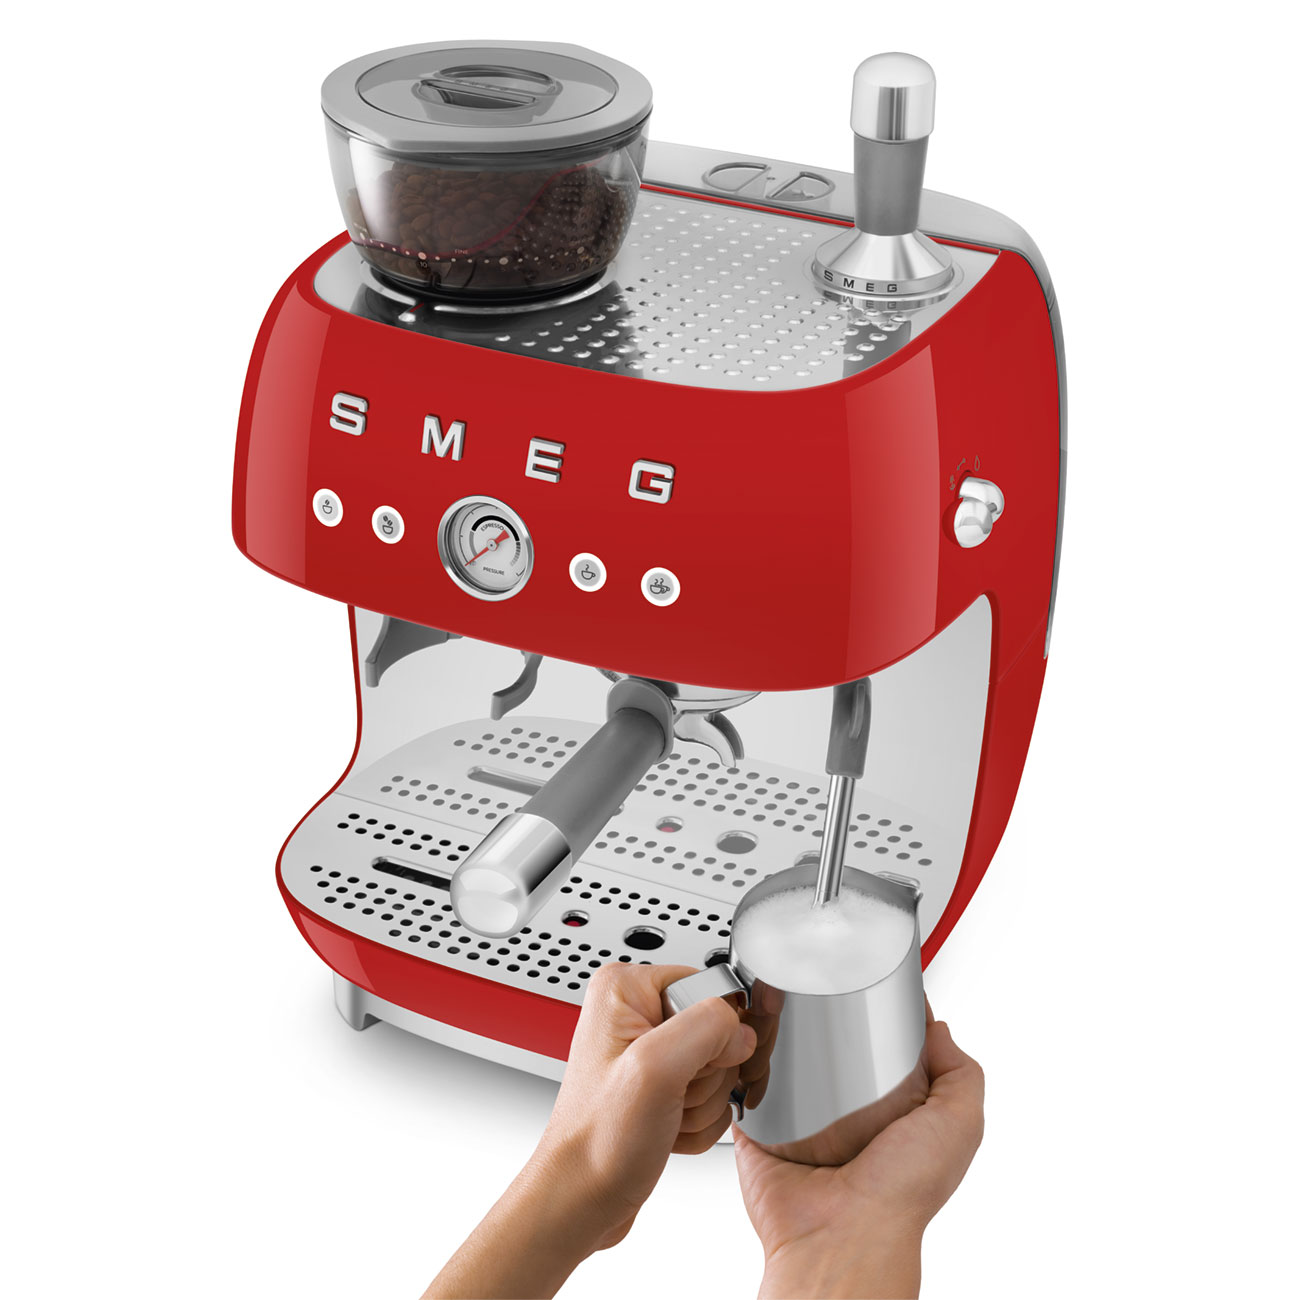 Smeg Red Espresso Manual Coffee Machine with Grinder_5